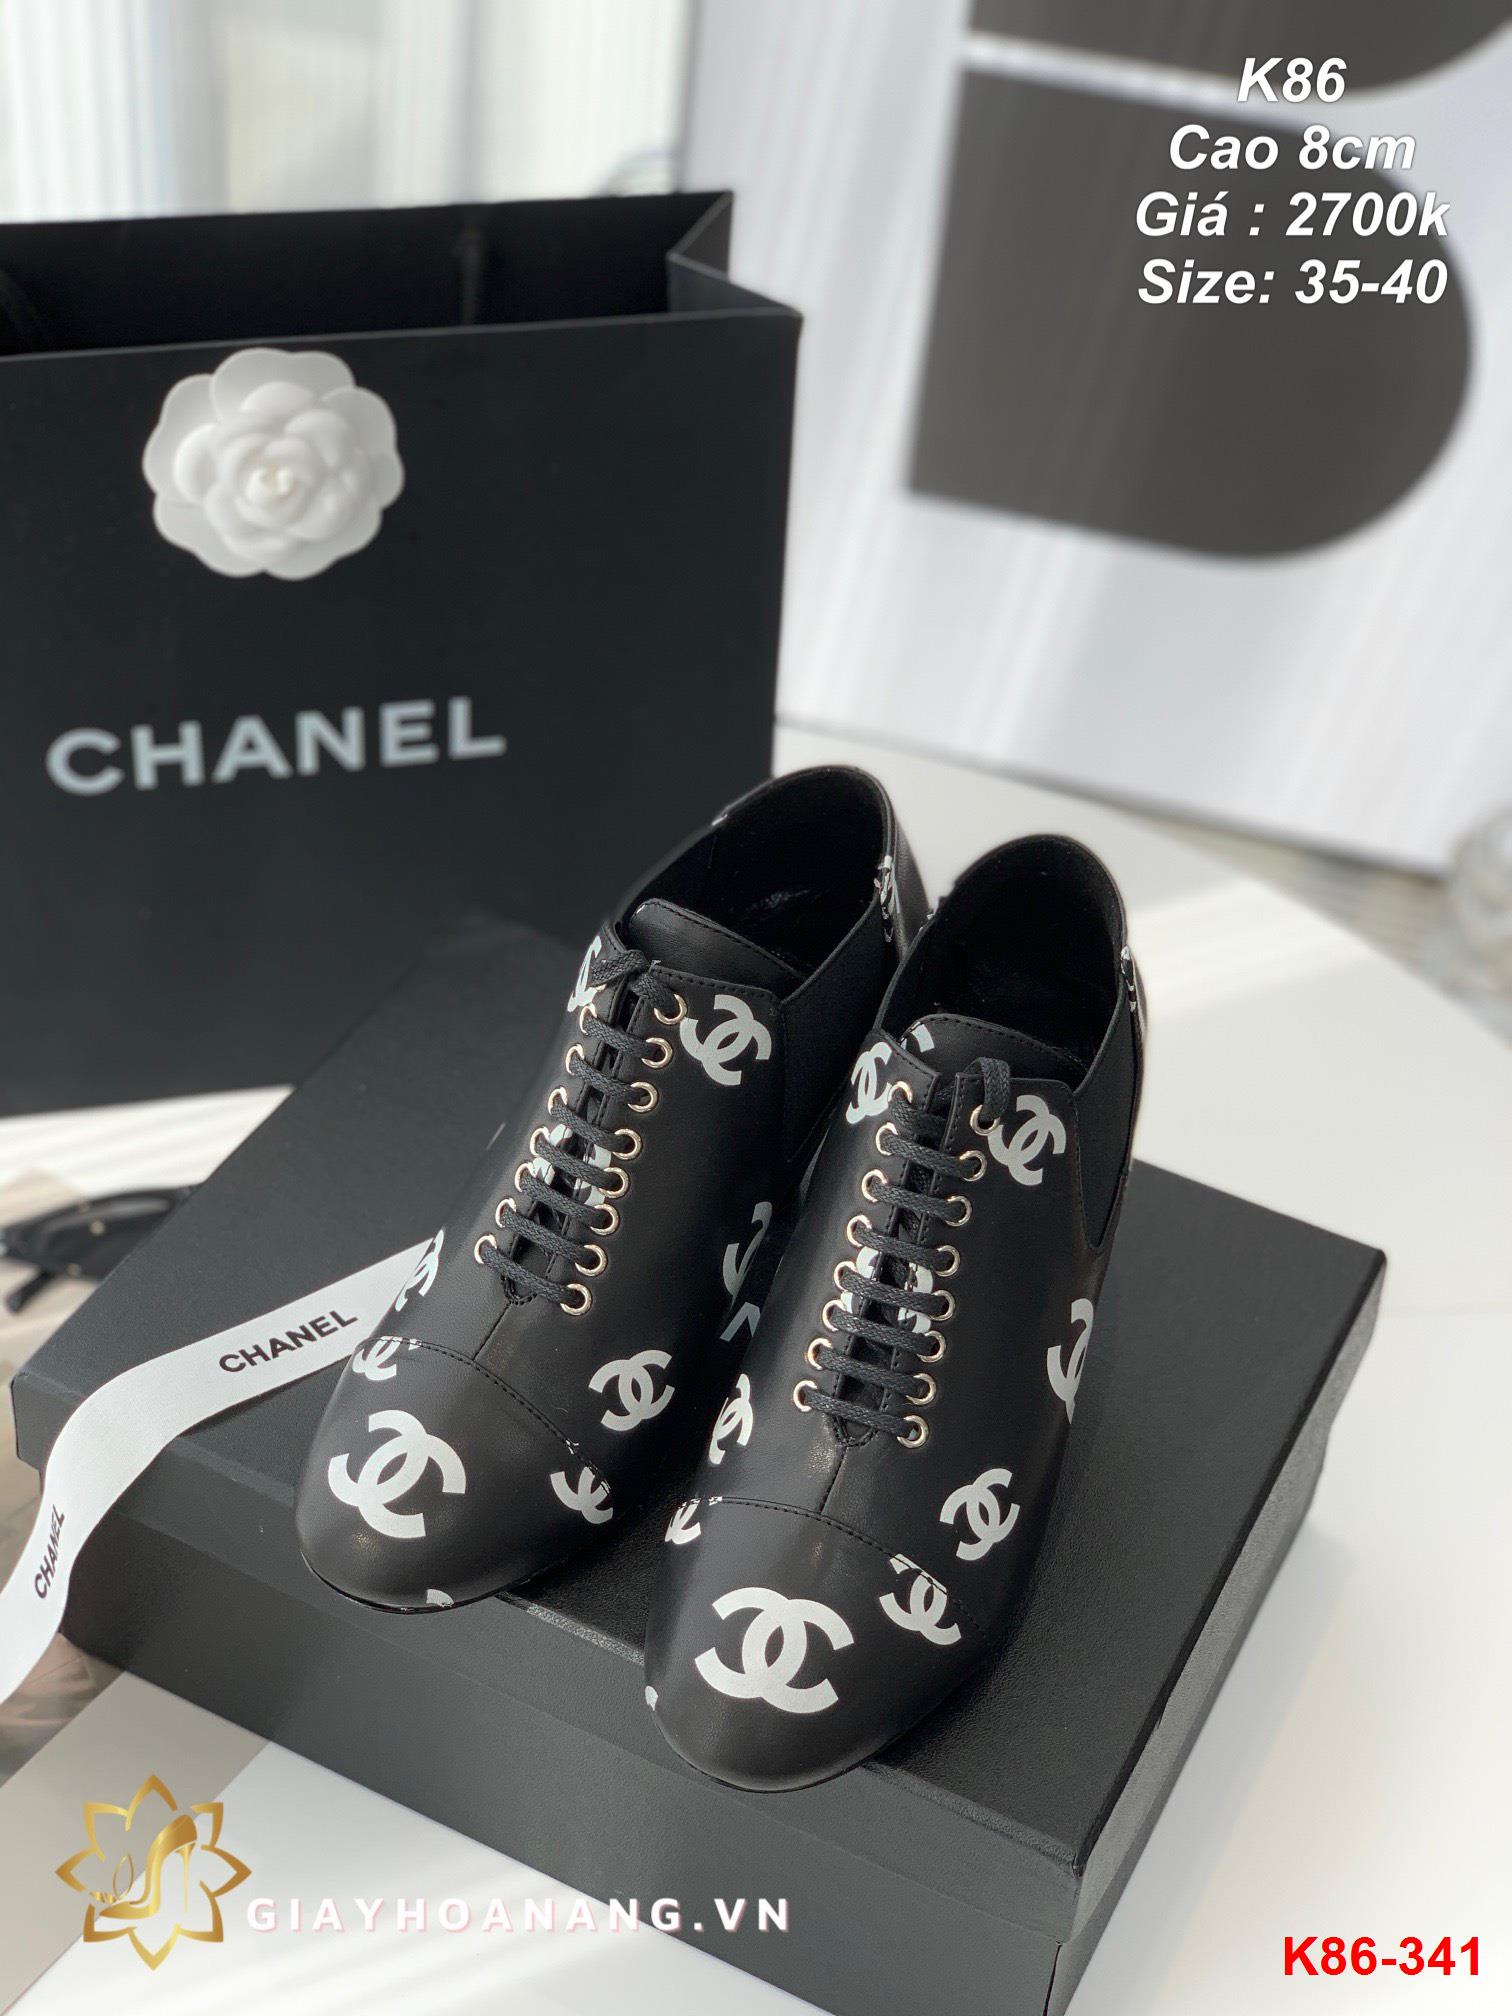 K86-341 Chanel giày cao 8cm siêu cấp